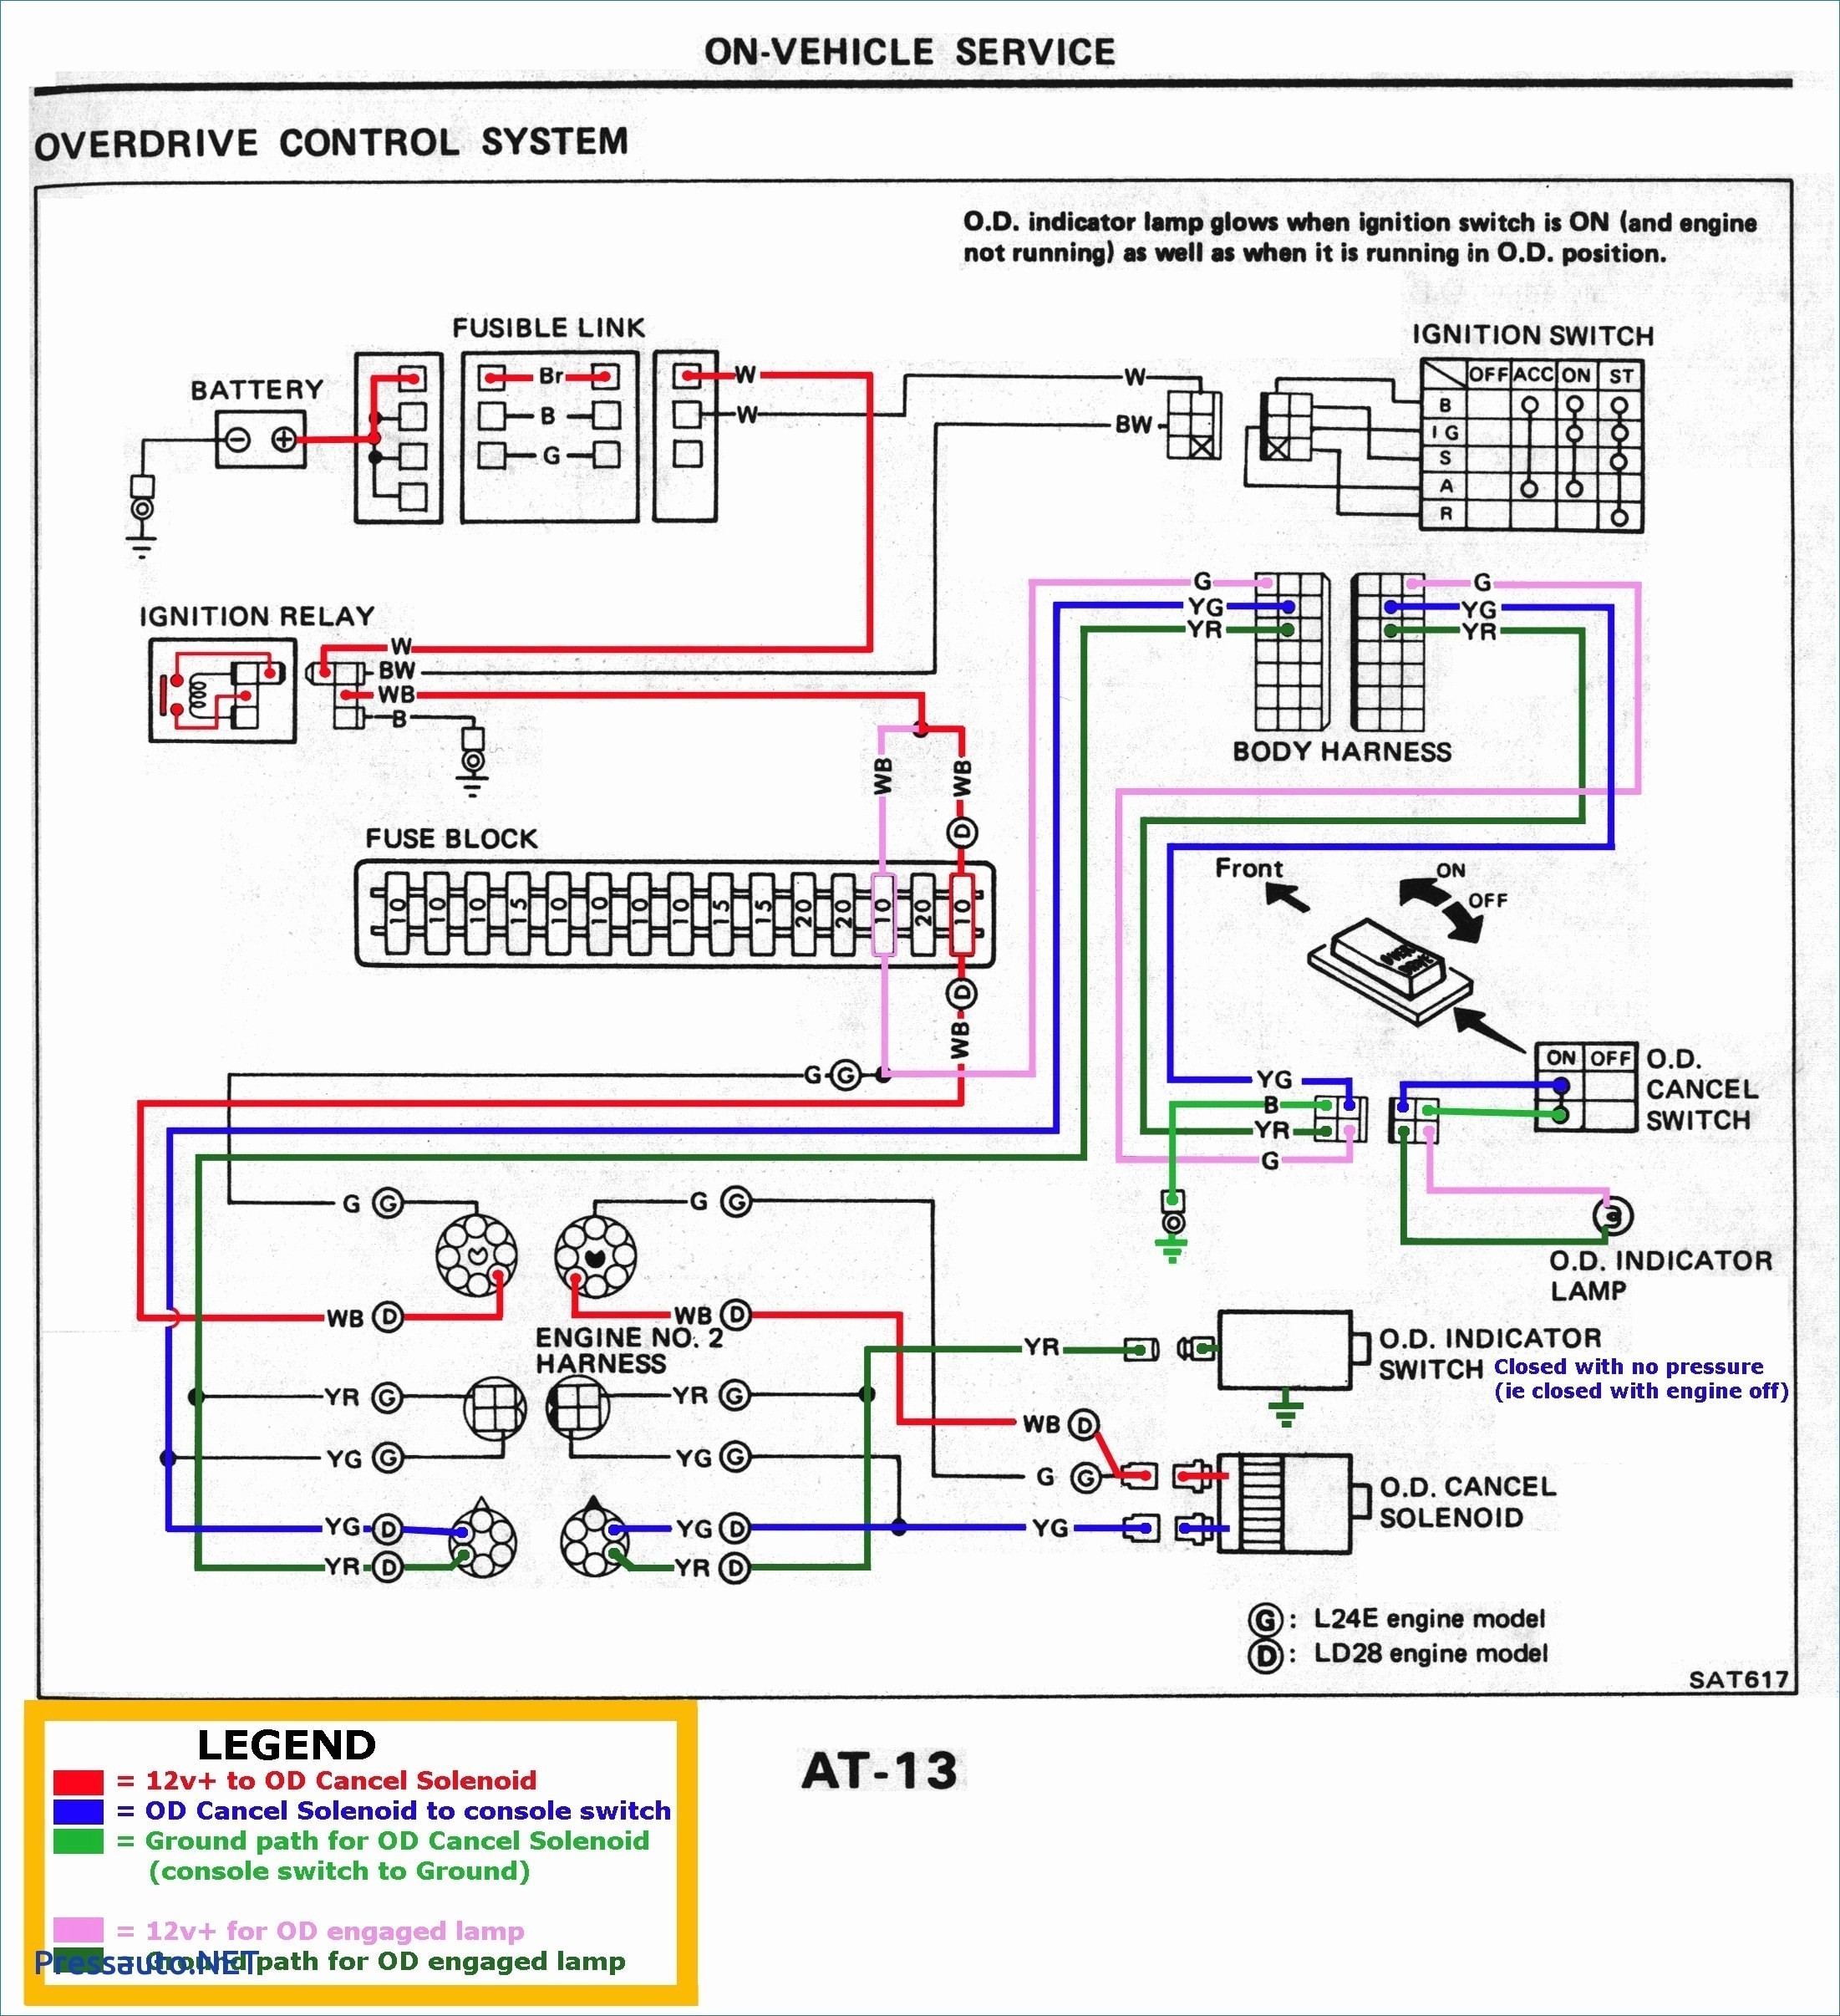 2000 Infiniti I30 Engine Diagram Fuse Box Diagram Peugeot 106 Automotive Wiring Diagrams Of 2000 Infiniti I30 Engine Diagram